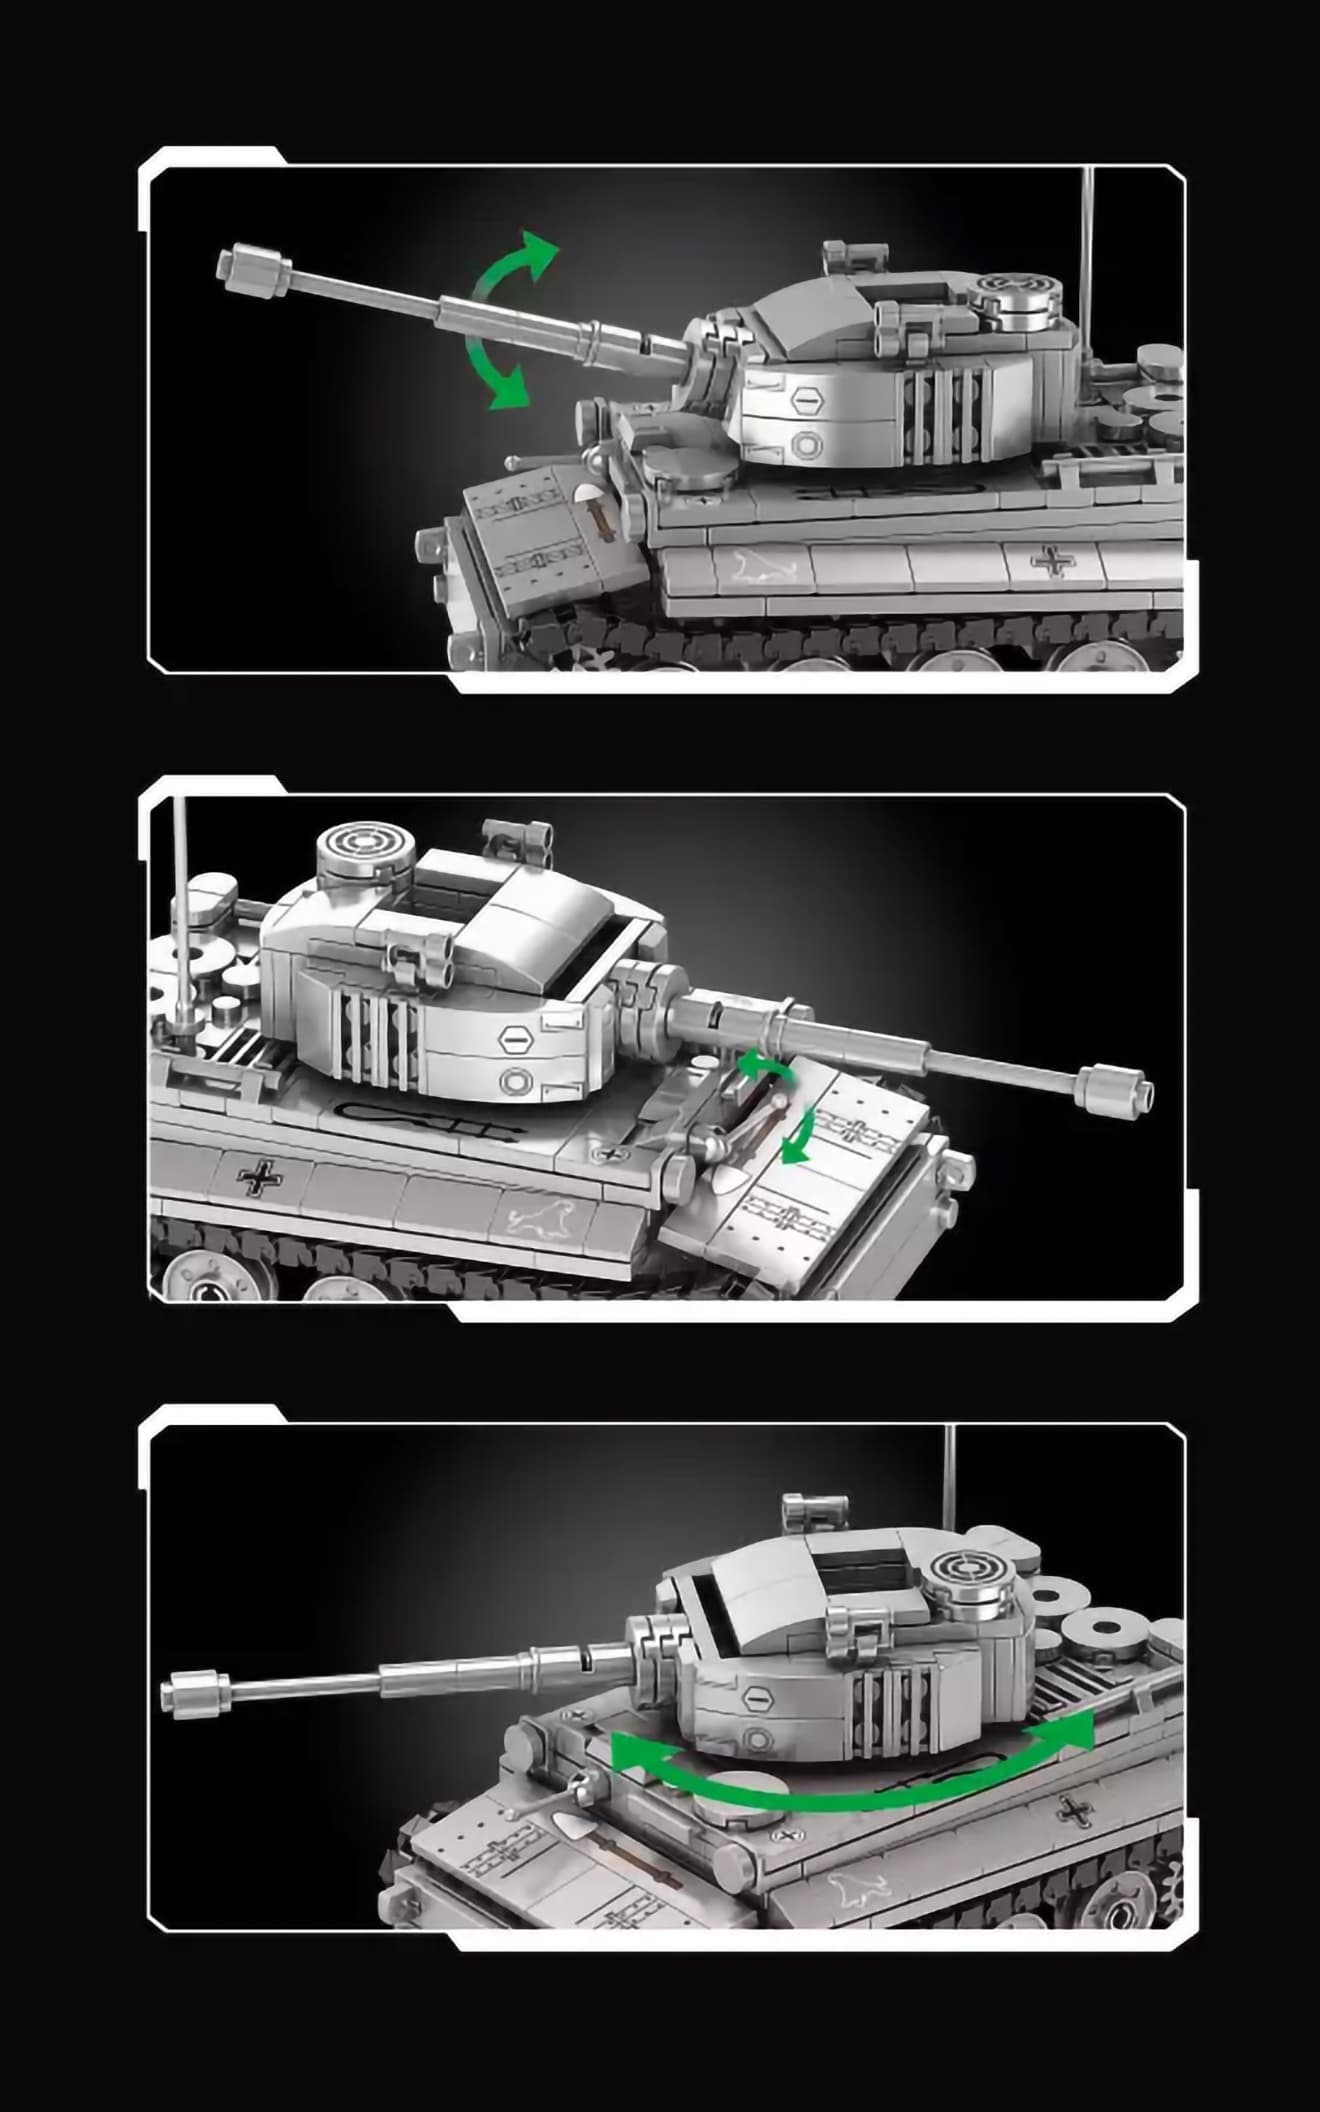 AFM Sd Kfz 181 ティーガー1 主力戦車 457Blocks